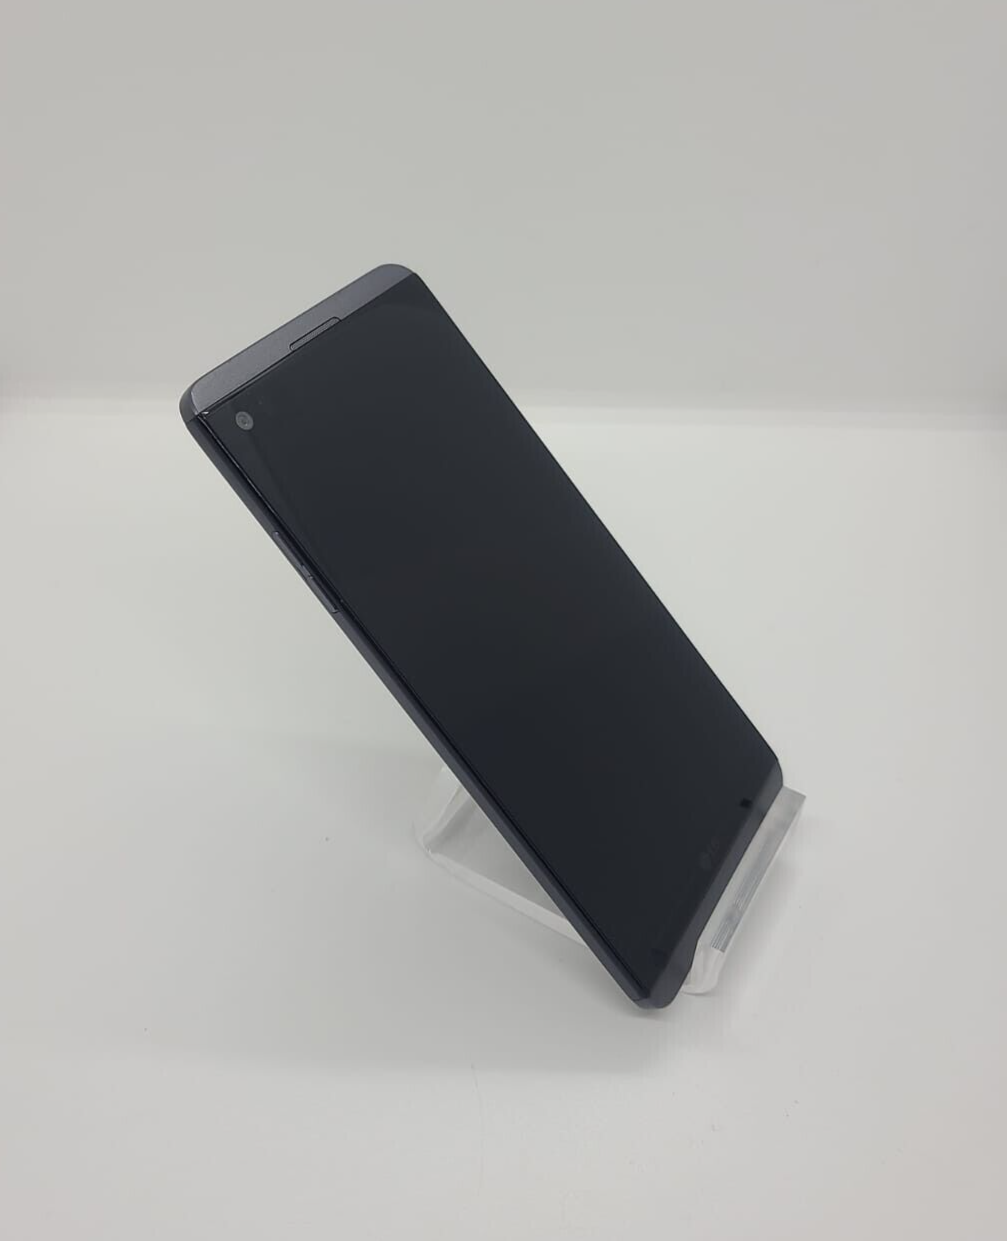 LG V20 64GB Titan Sprint Android 4G LTE Smartphone LS997